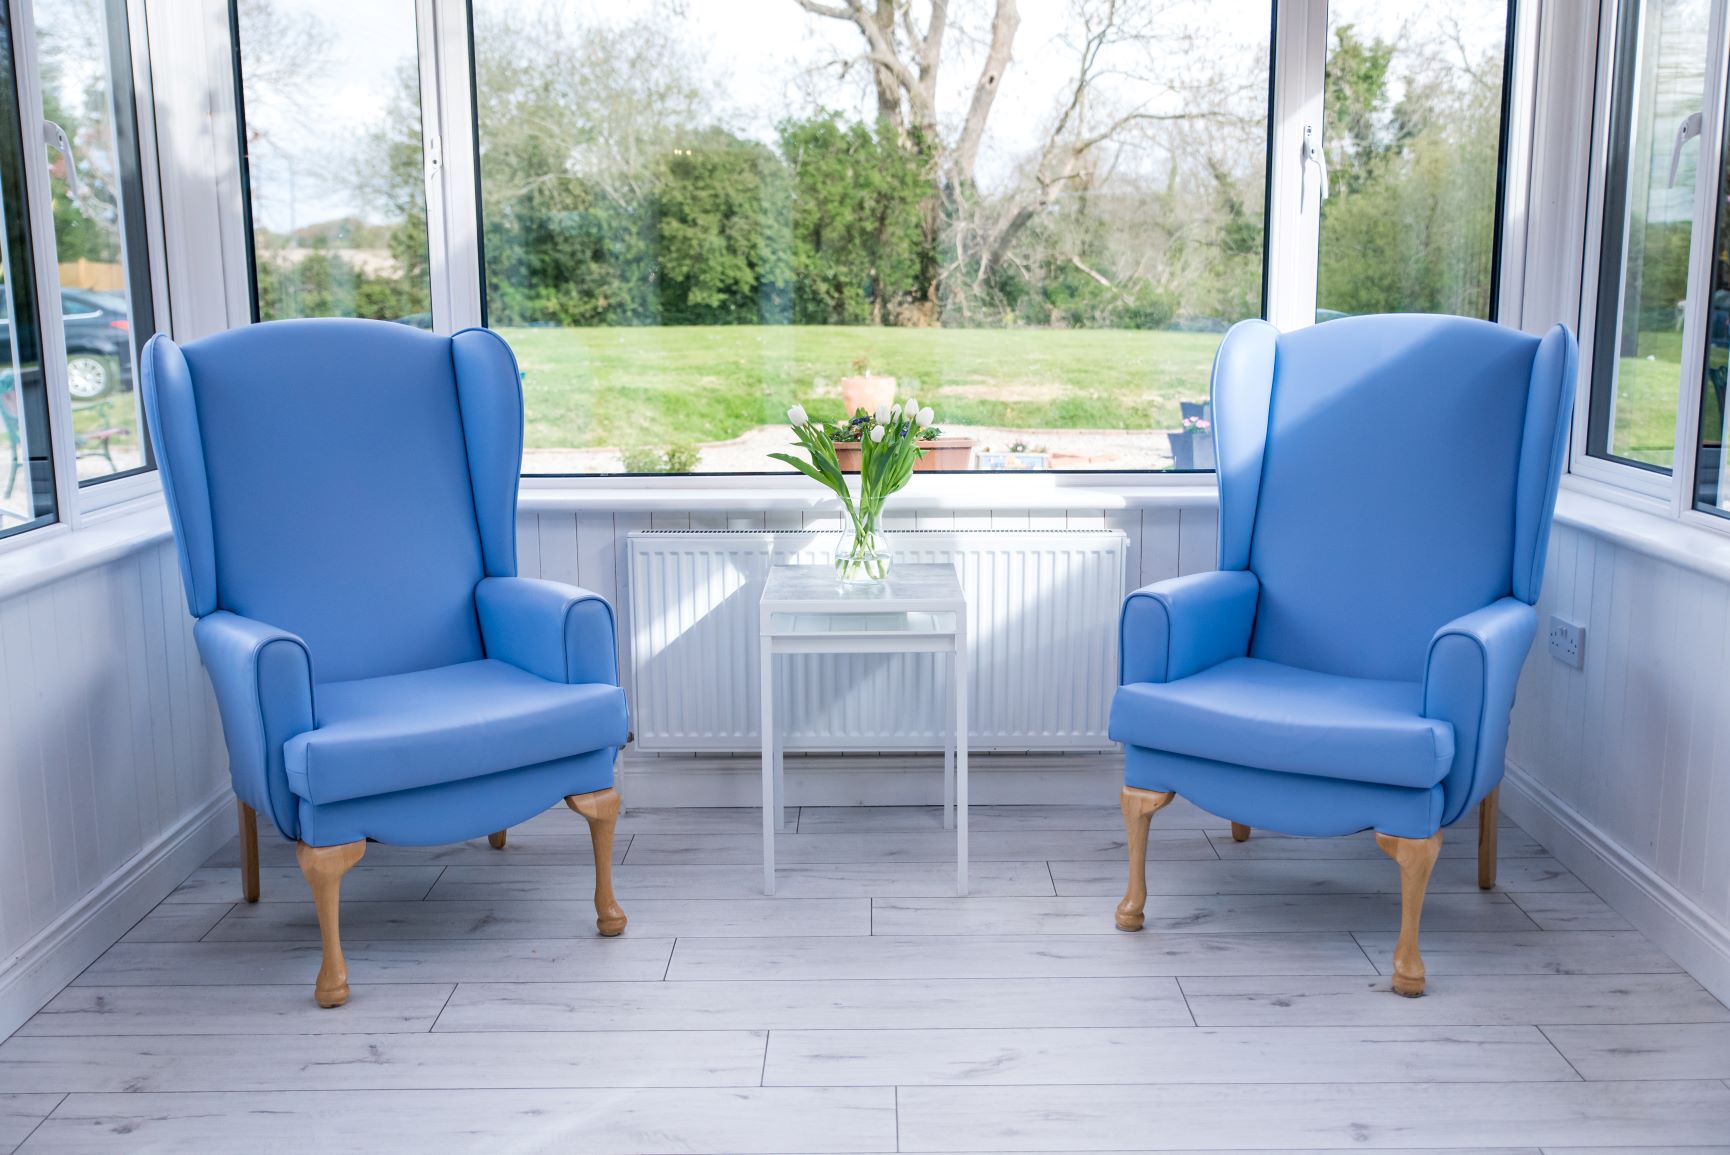 The beautiful blue armchairs in the garden veranda.